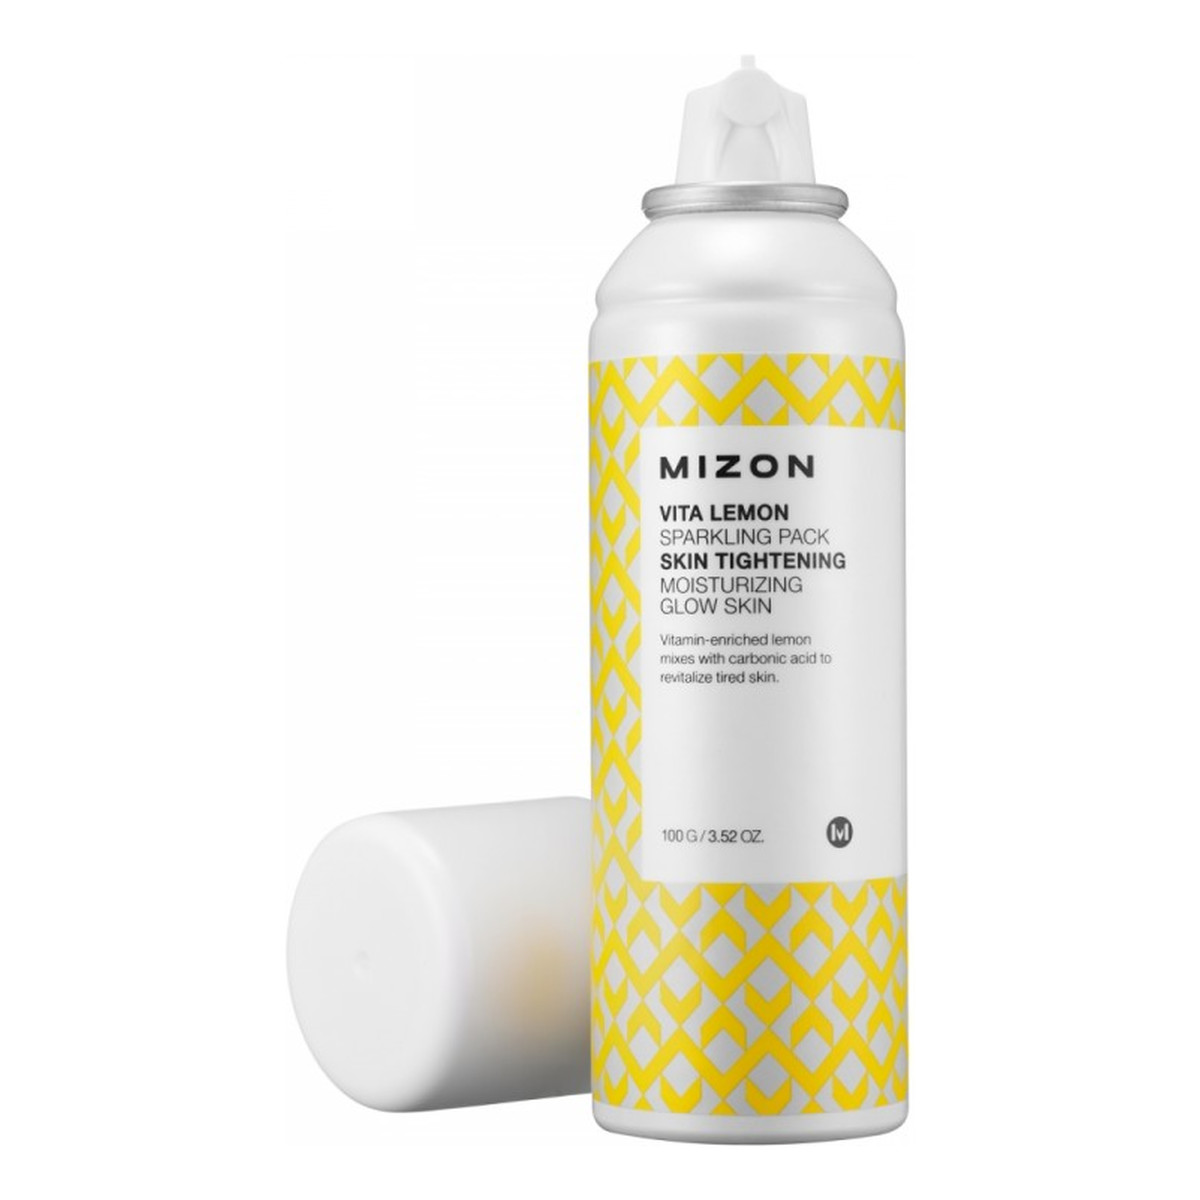 Mizon Vita Lemon Sparkling Pack Cytrynowa maska z kaolinem 100g